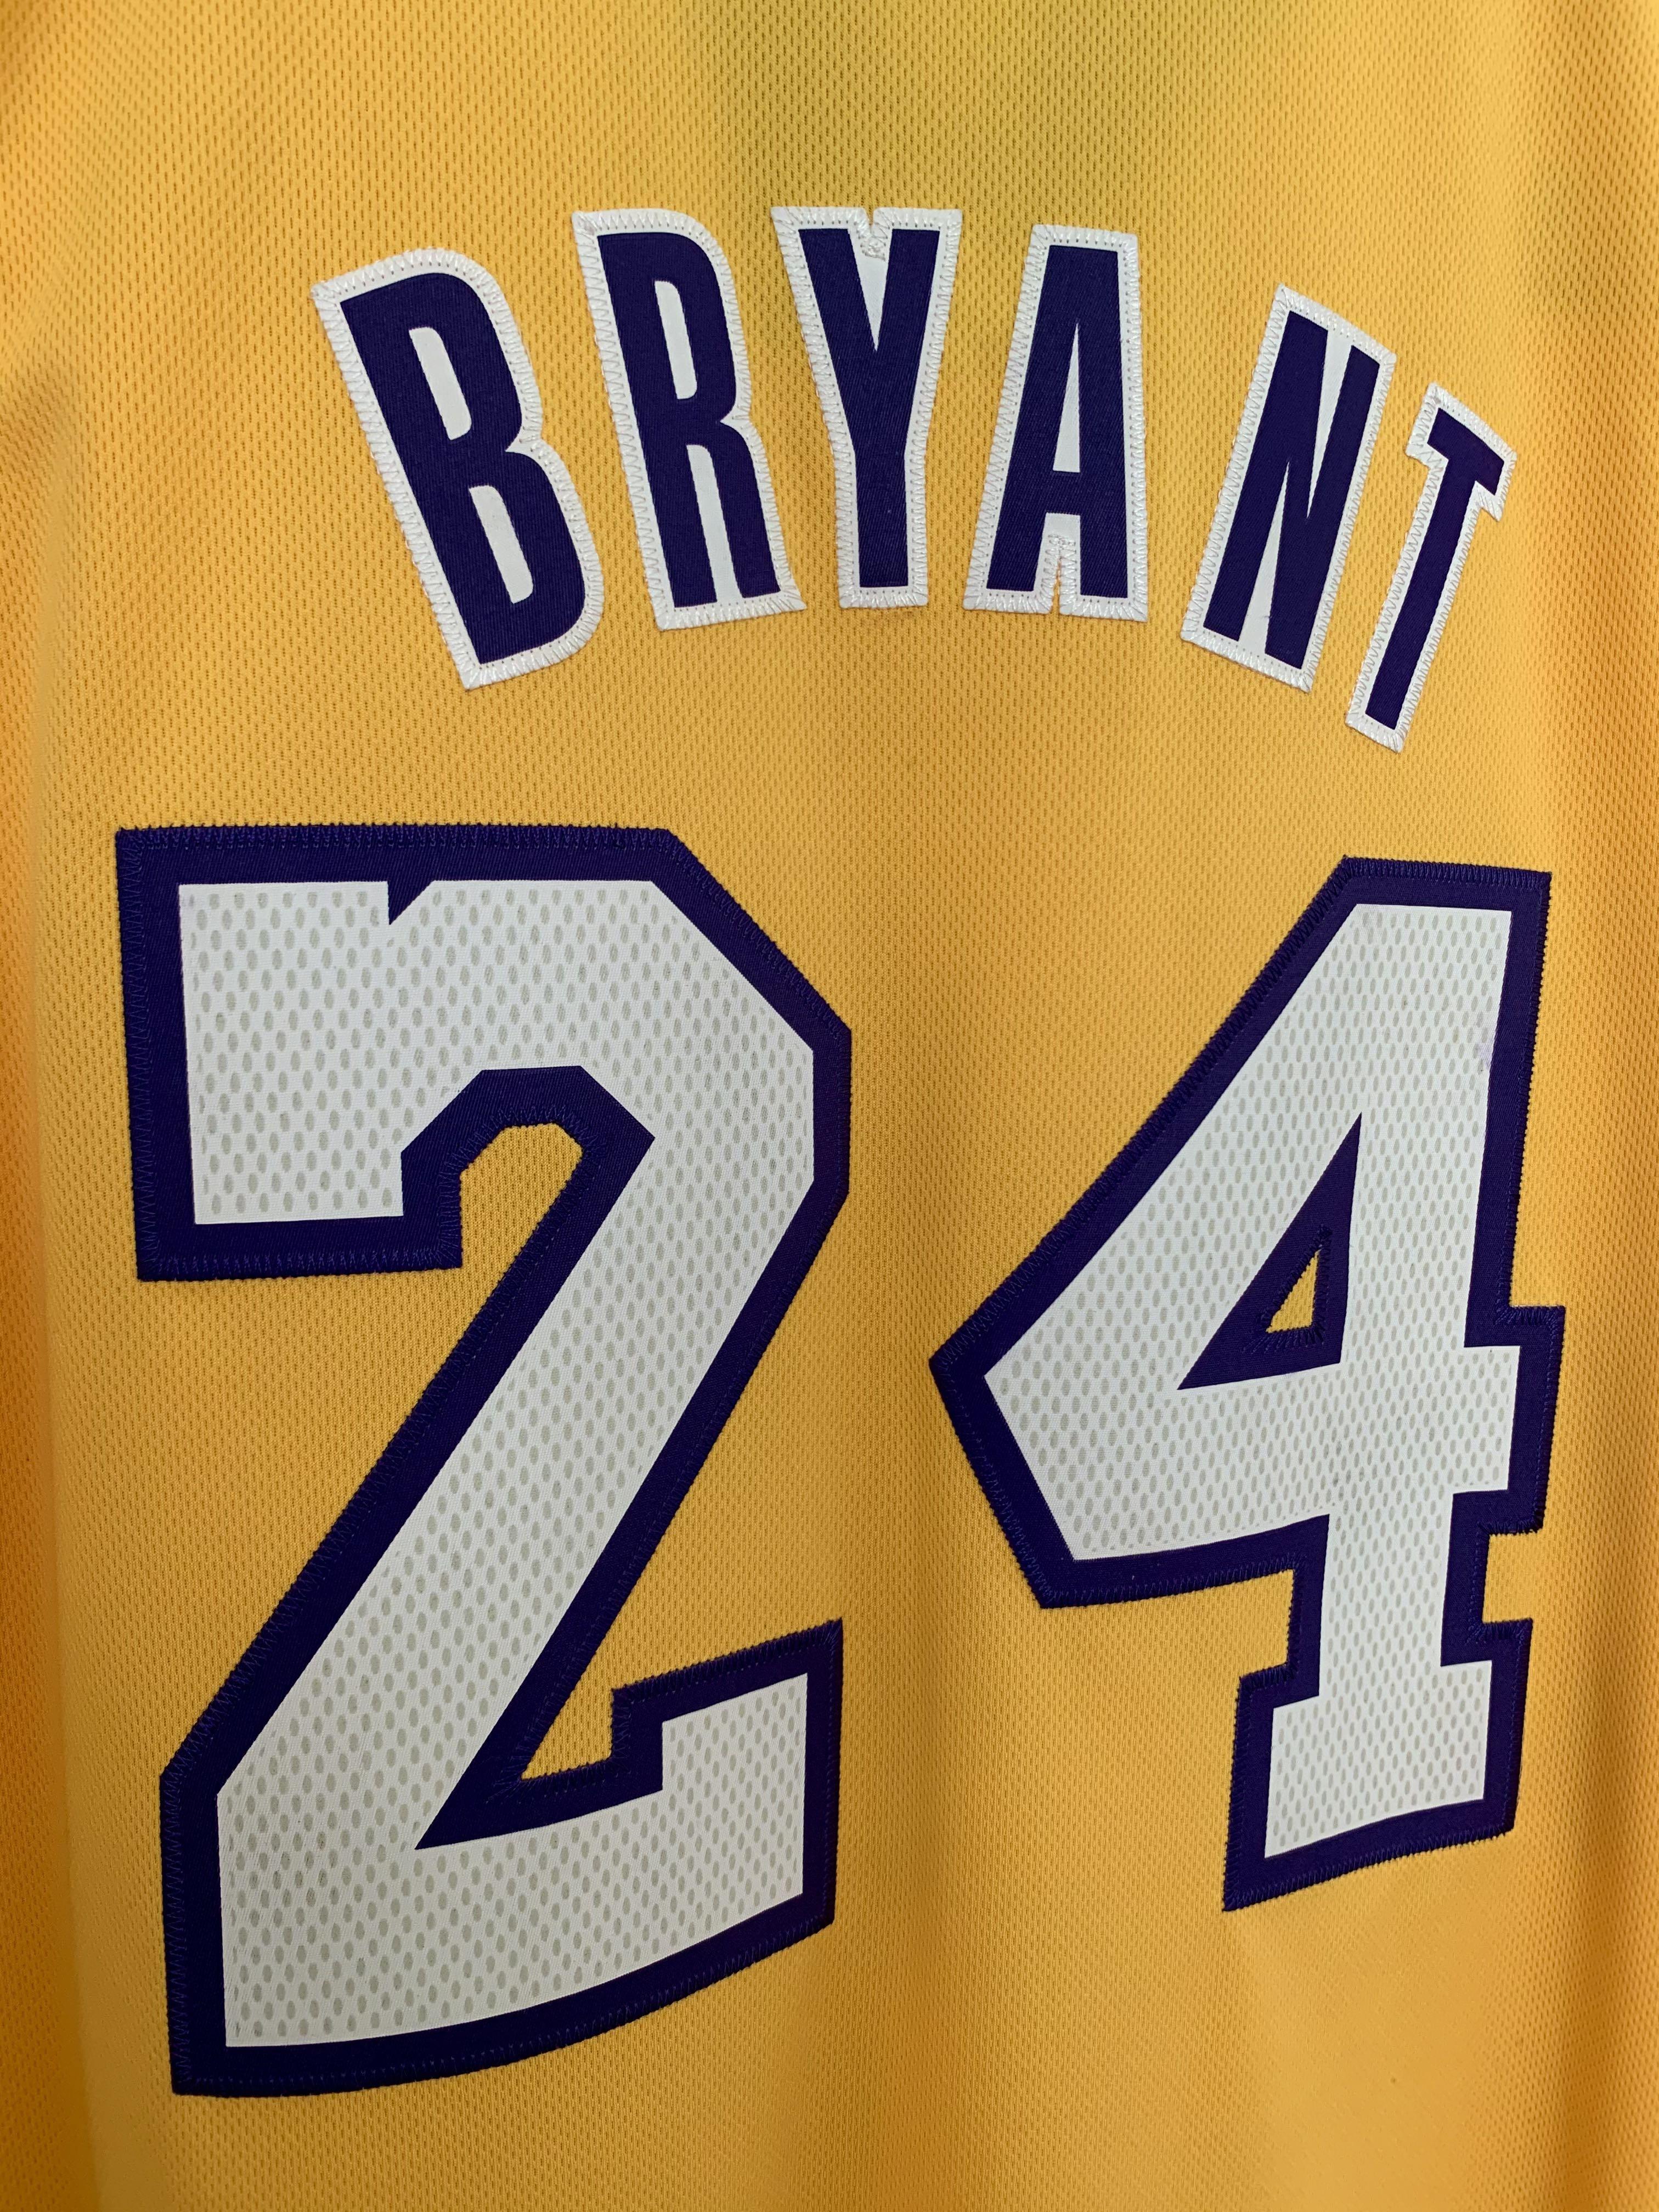 Kobe Bryant Authentic Nike City LA Lakers Jersey 2021-22 BNWT